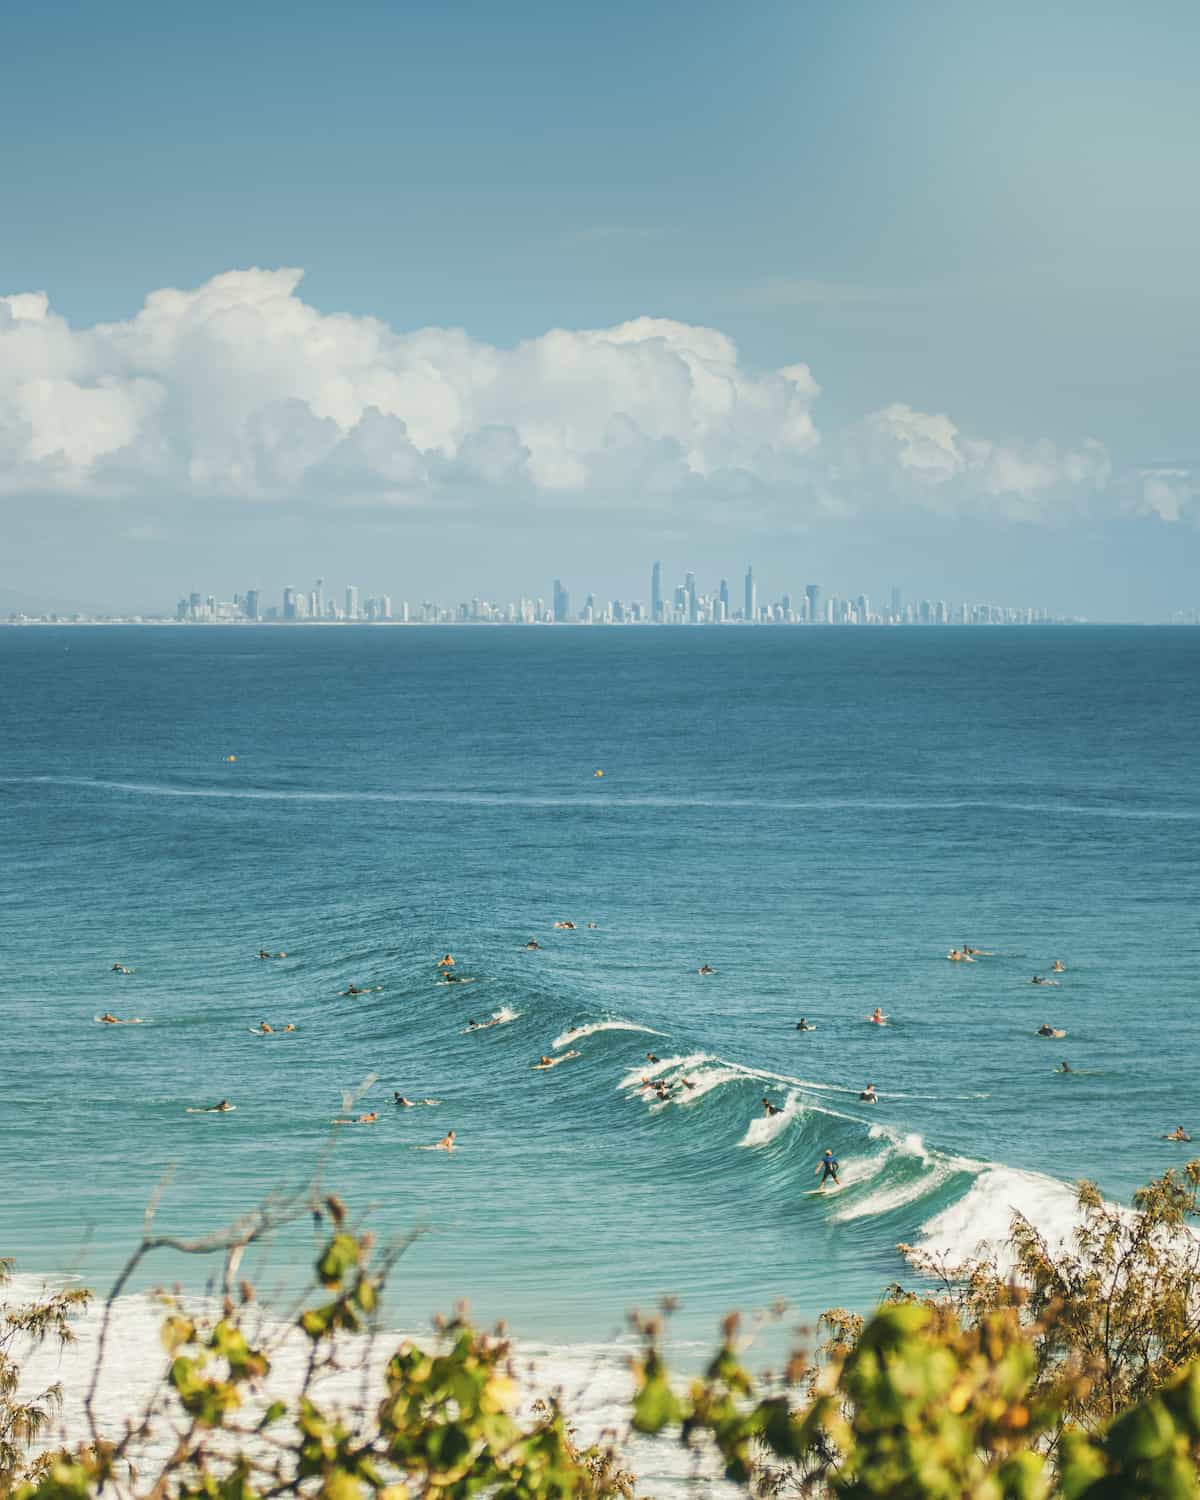 Surfers taking a wave in Australia.